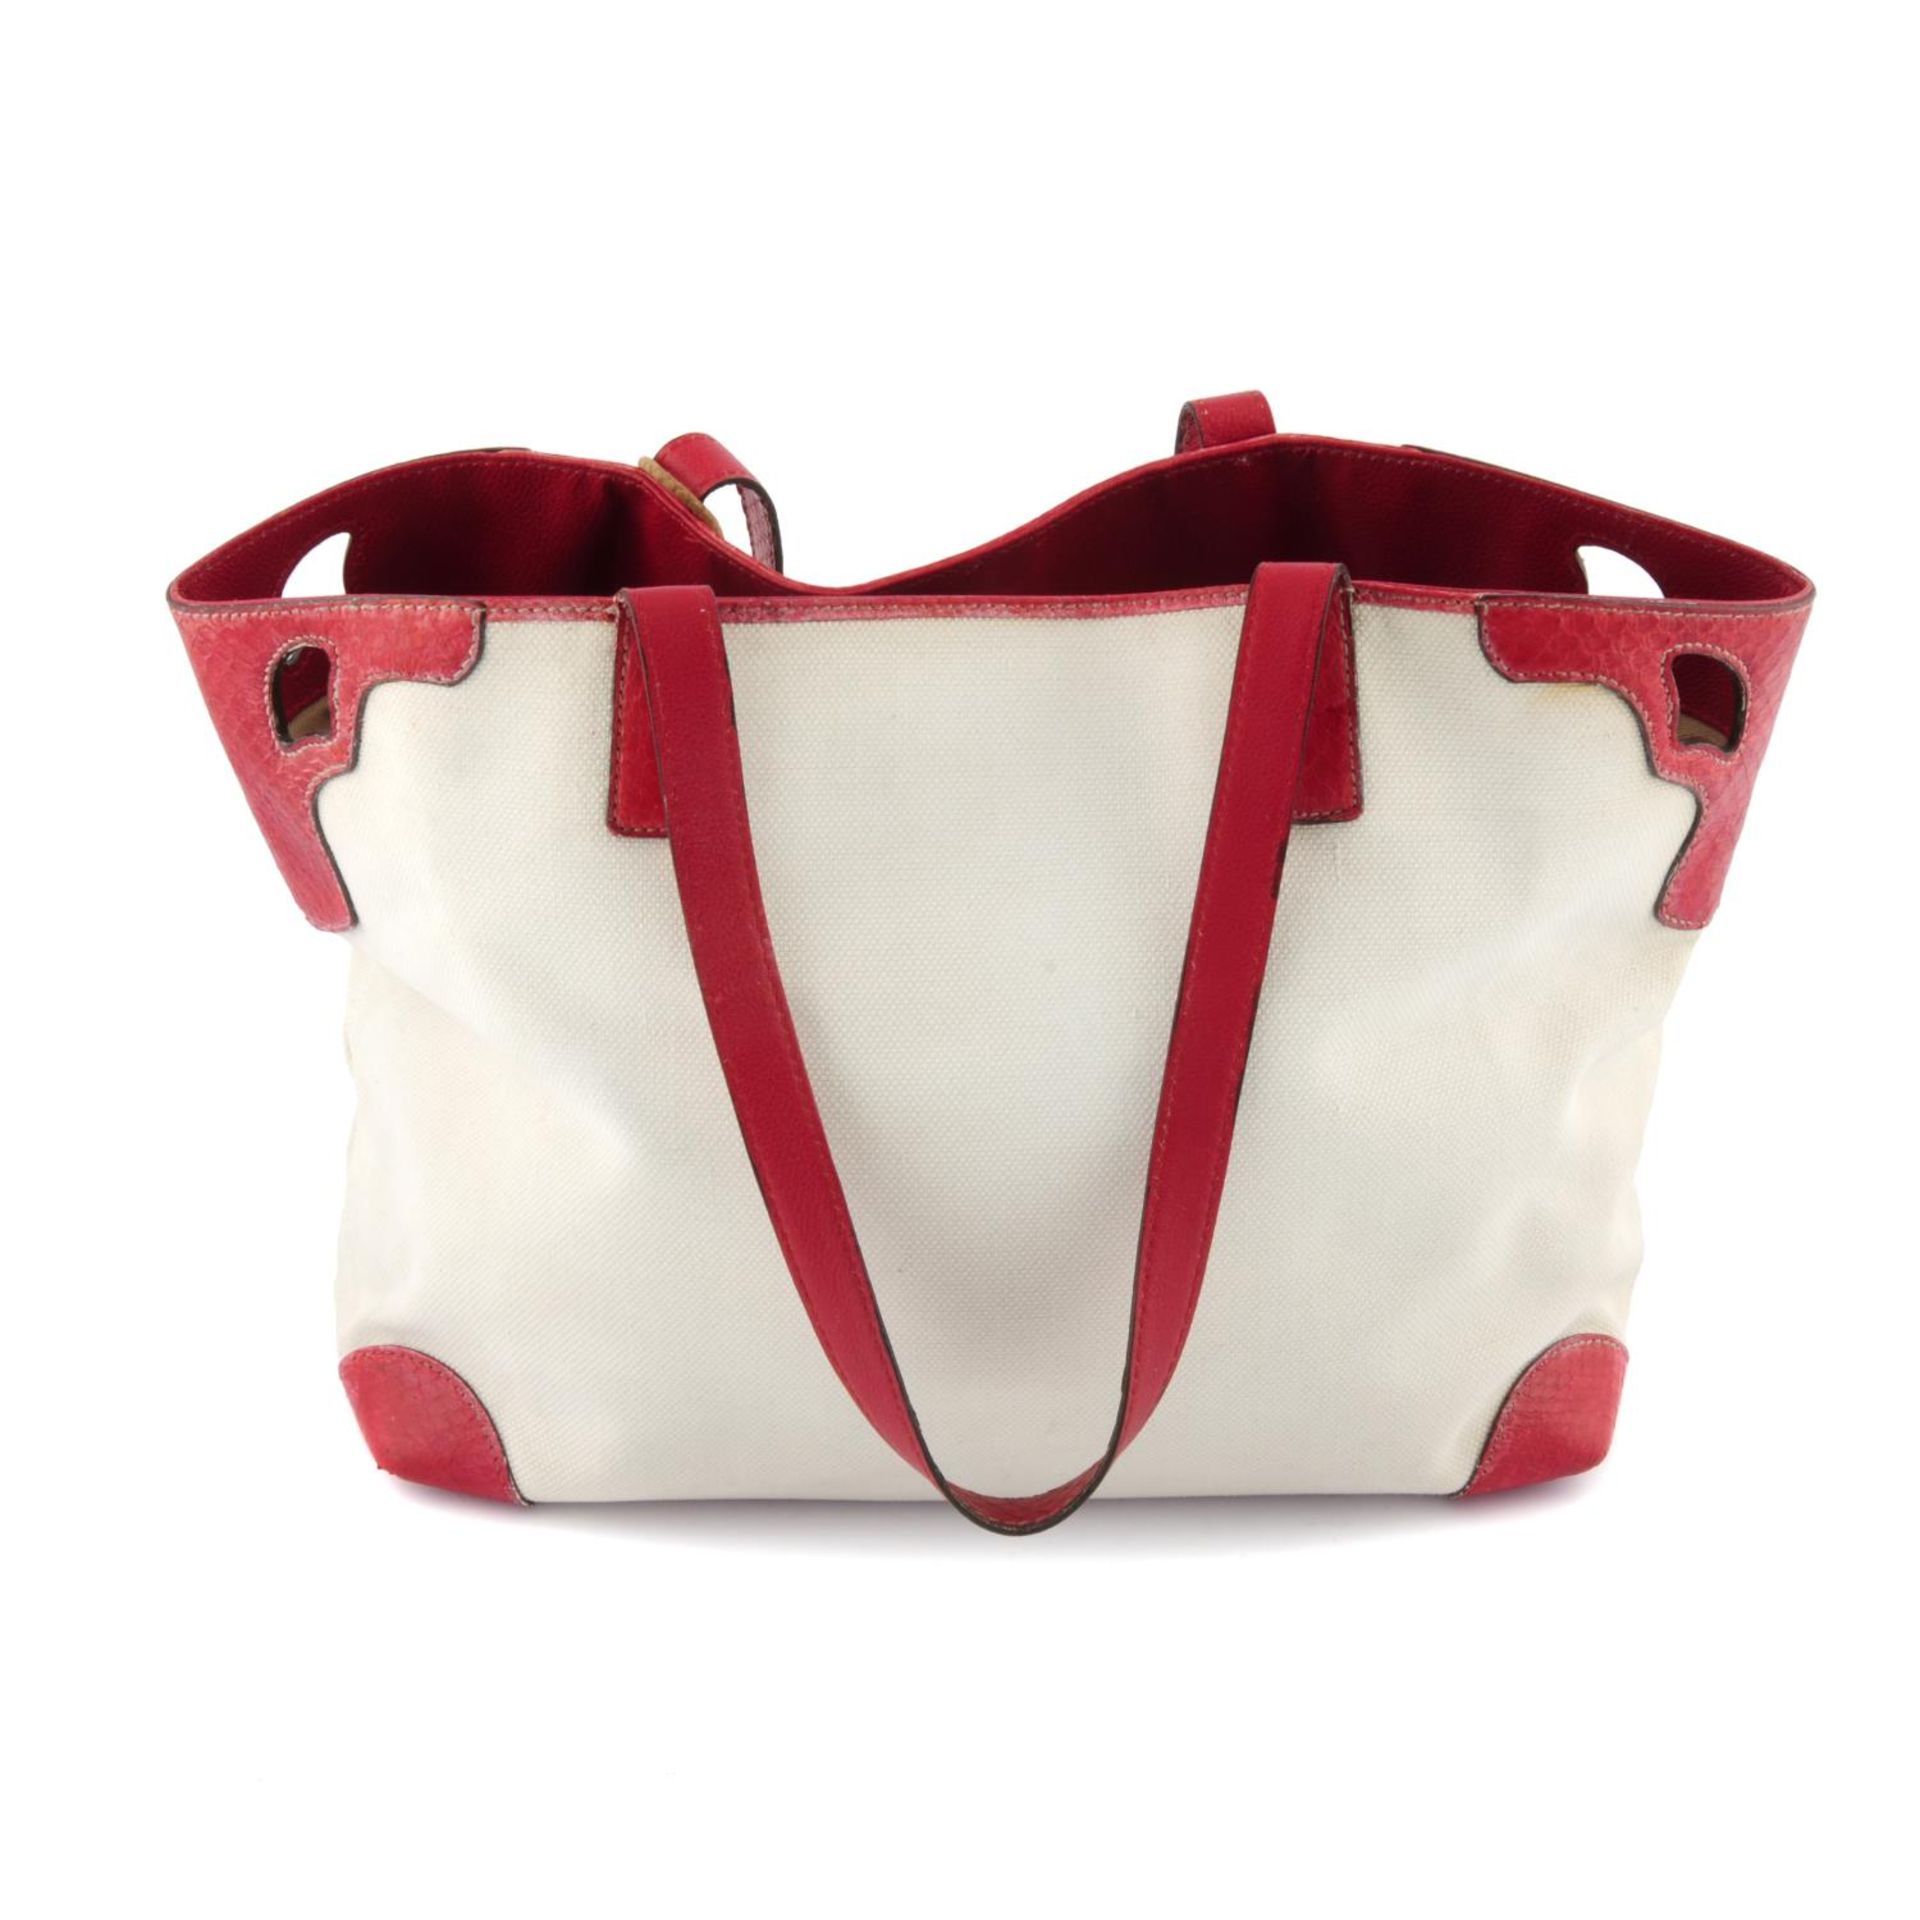 CARTIER - a white and red Marcello de Cartier handbag. - Image 2 of 4